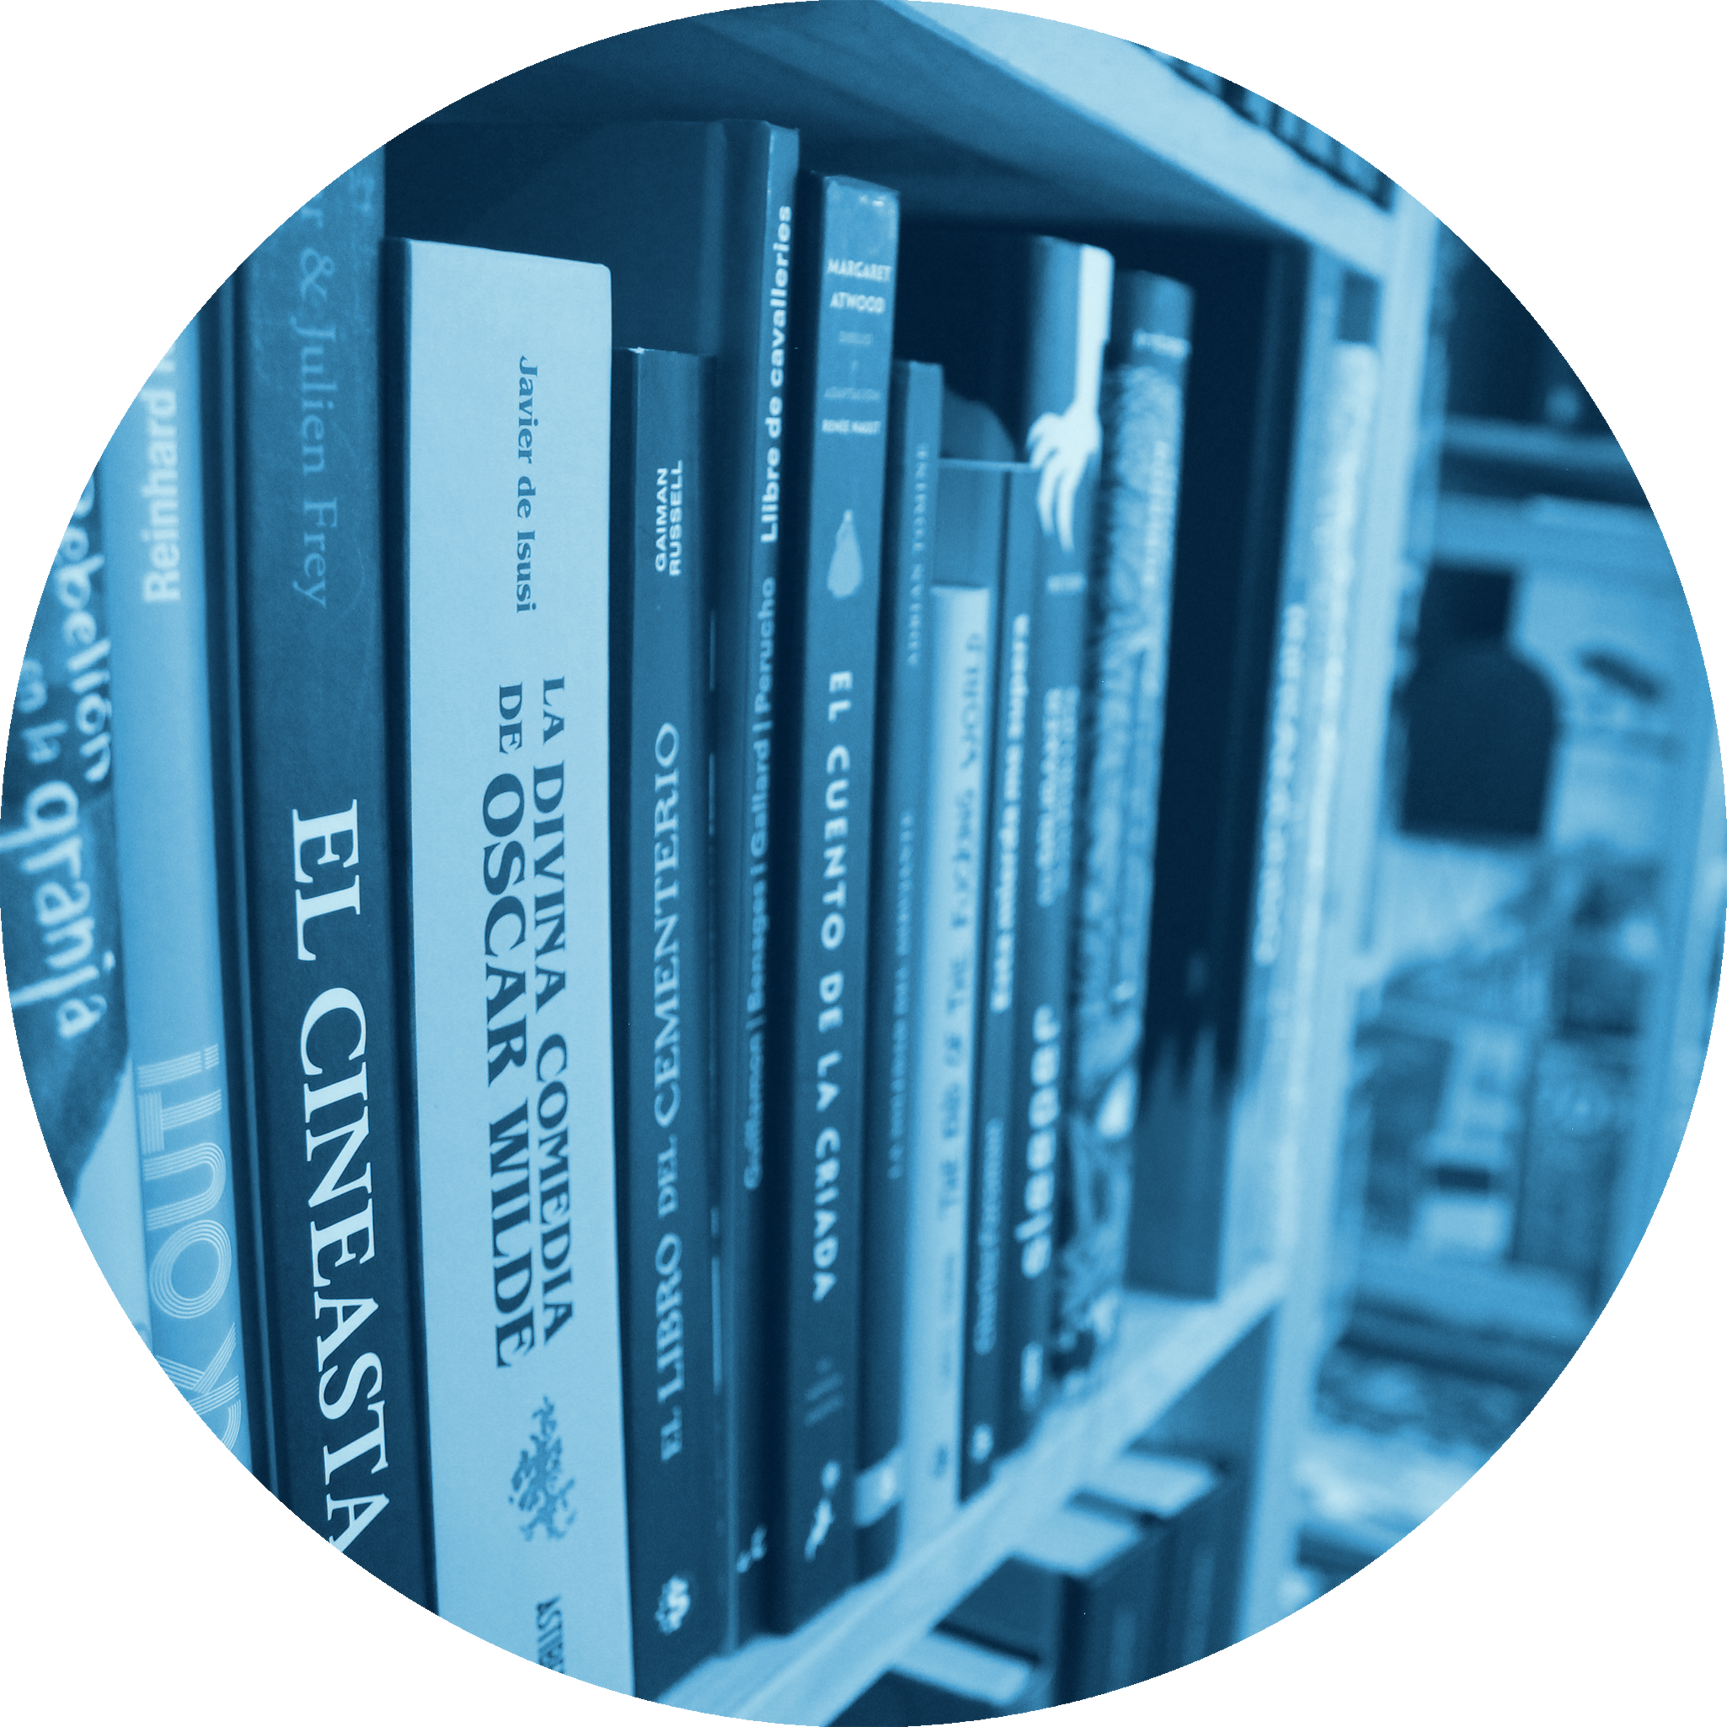 Libros para centros educativos, culturales o bibliotecas